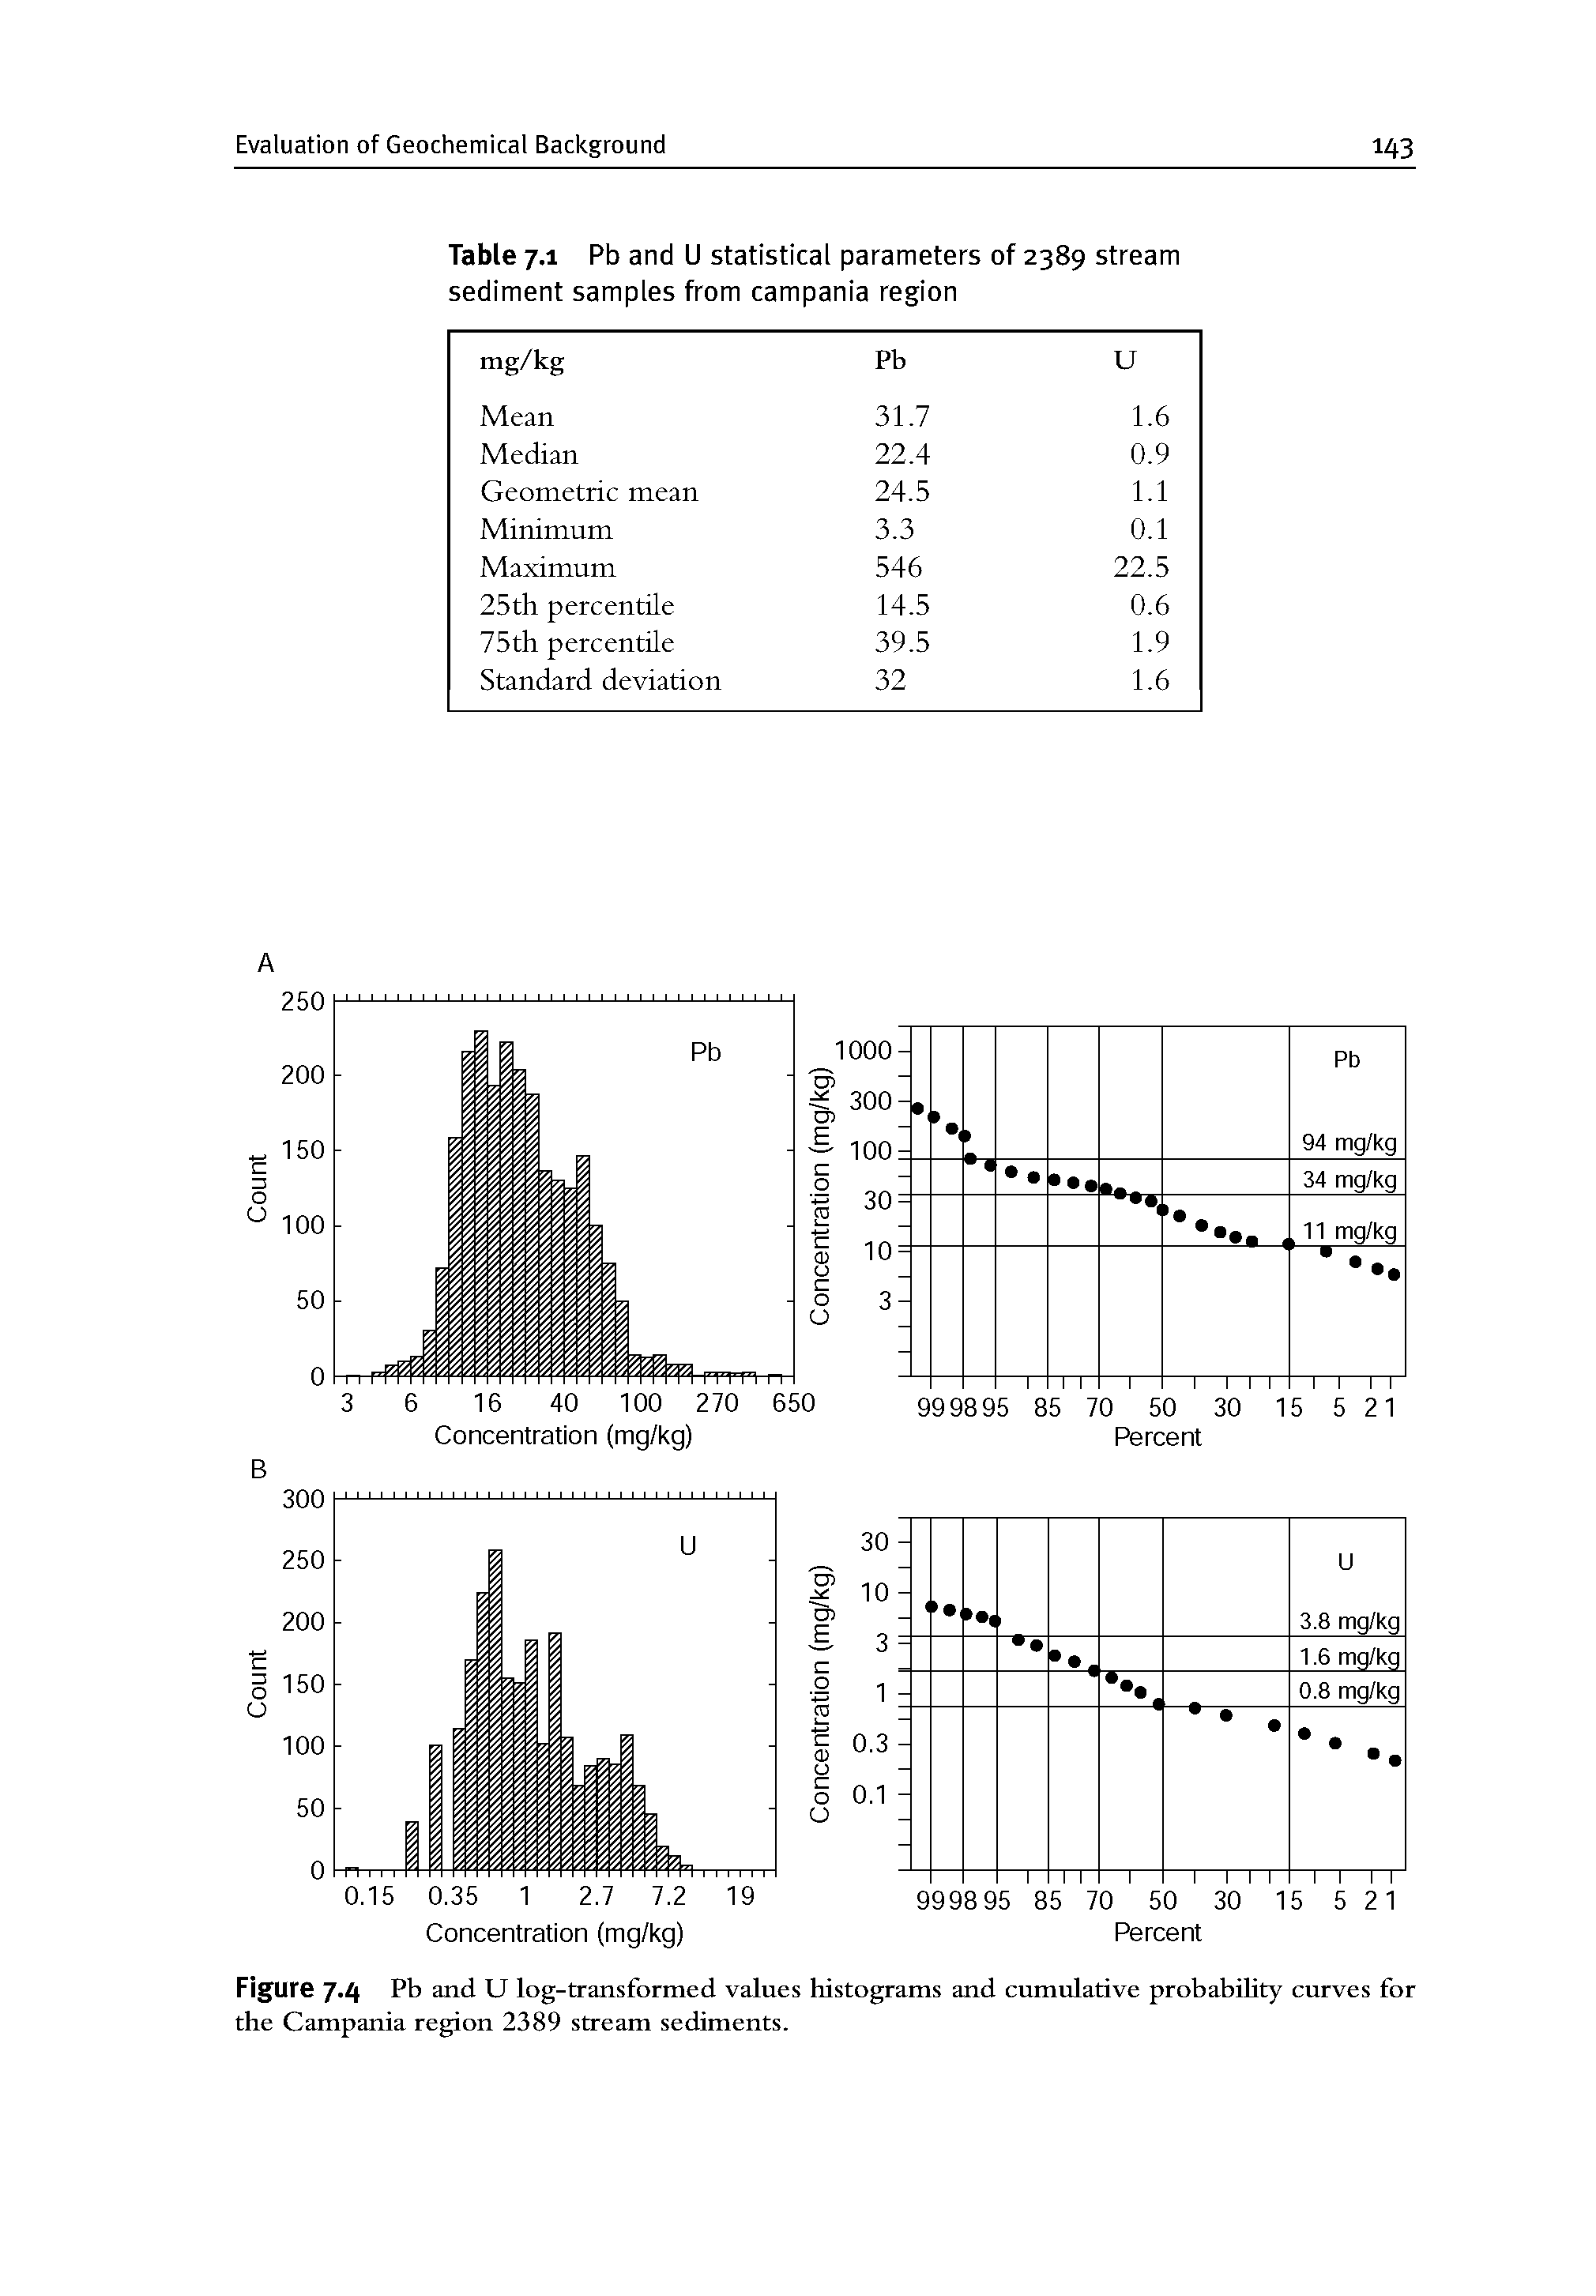 Figure 7-4 Pb U log-transformed values histograms and cumulative probability curves for the Campania region 2389 stream sediments.